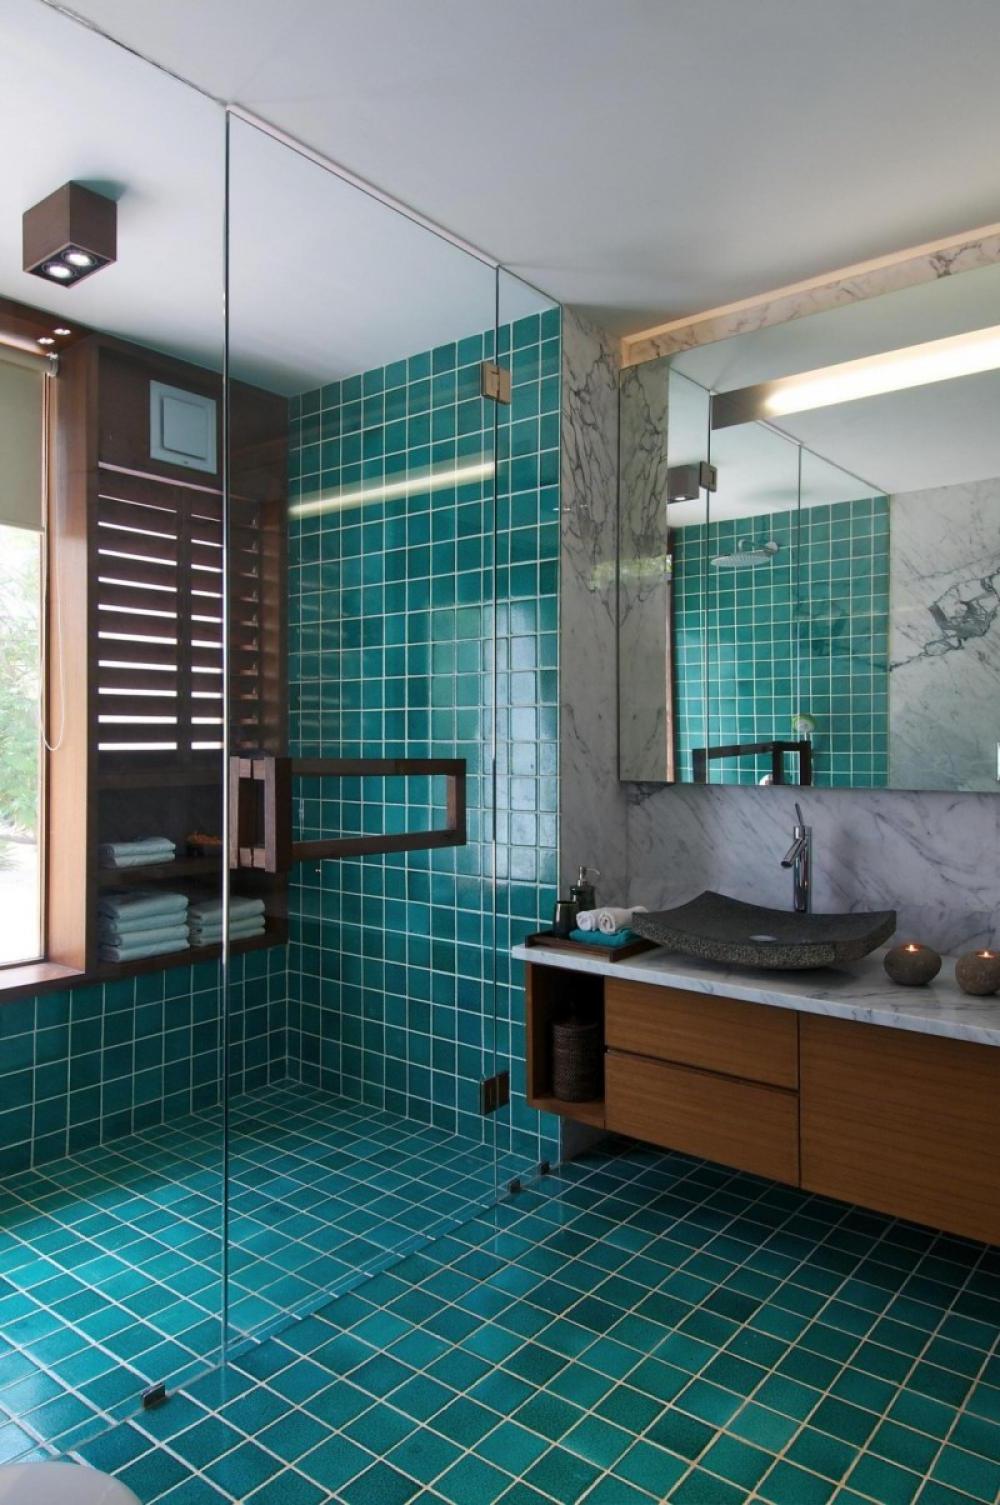 bathroom tile marble tiles bathrooms shower fliesen designs bath ideen badezimmer bad floor modern clean salle carrelage turquoise blau glass